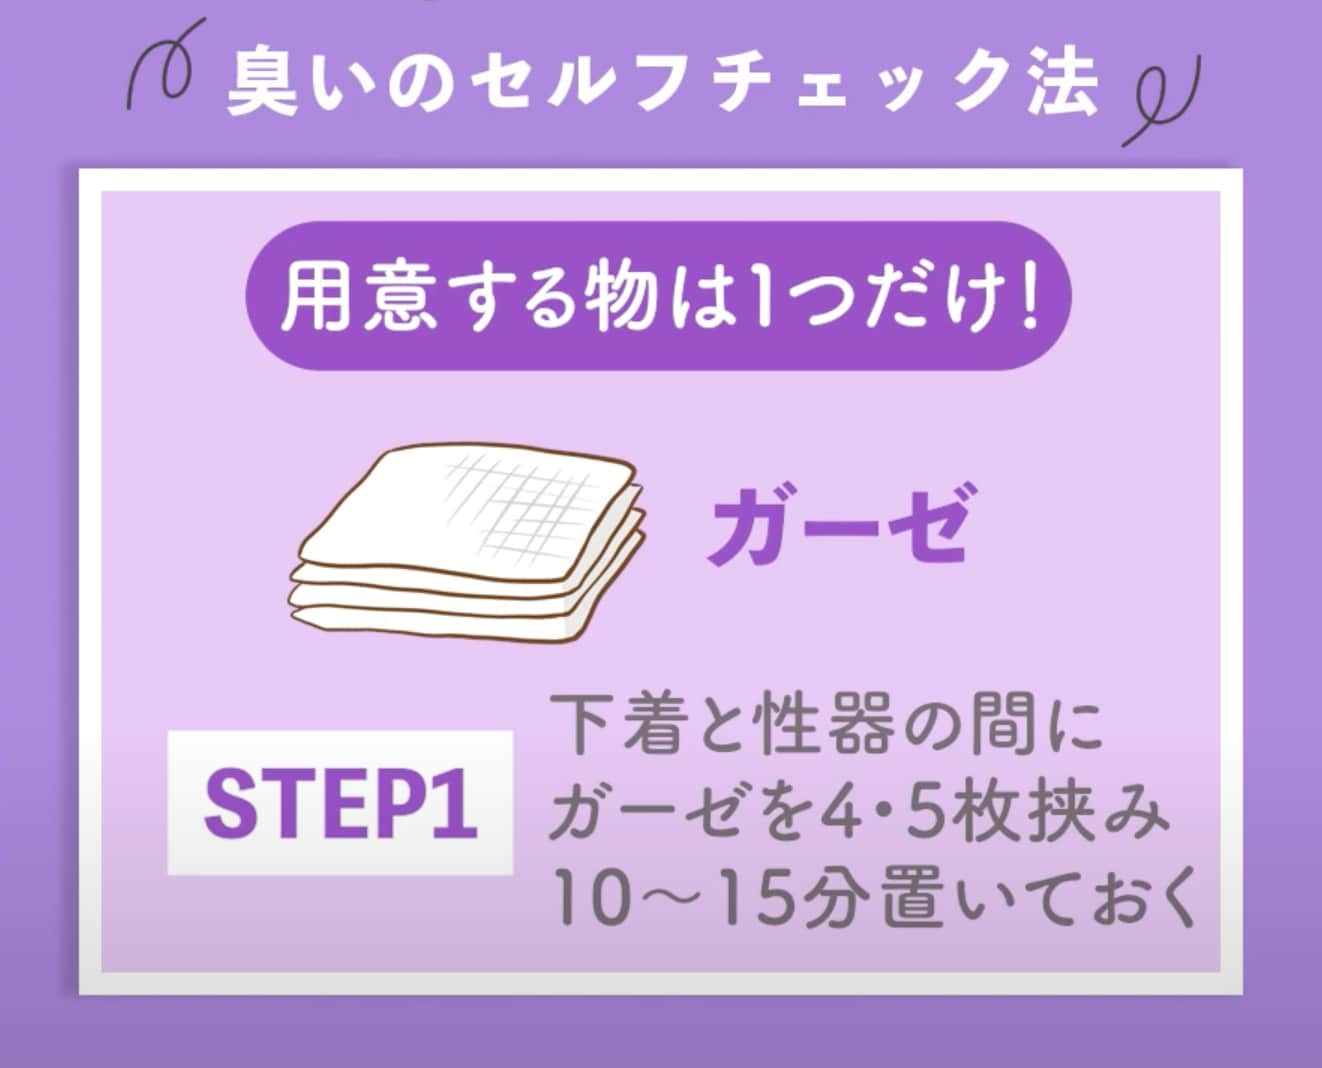 STEP①